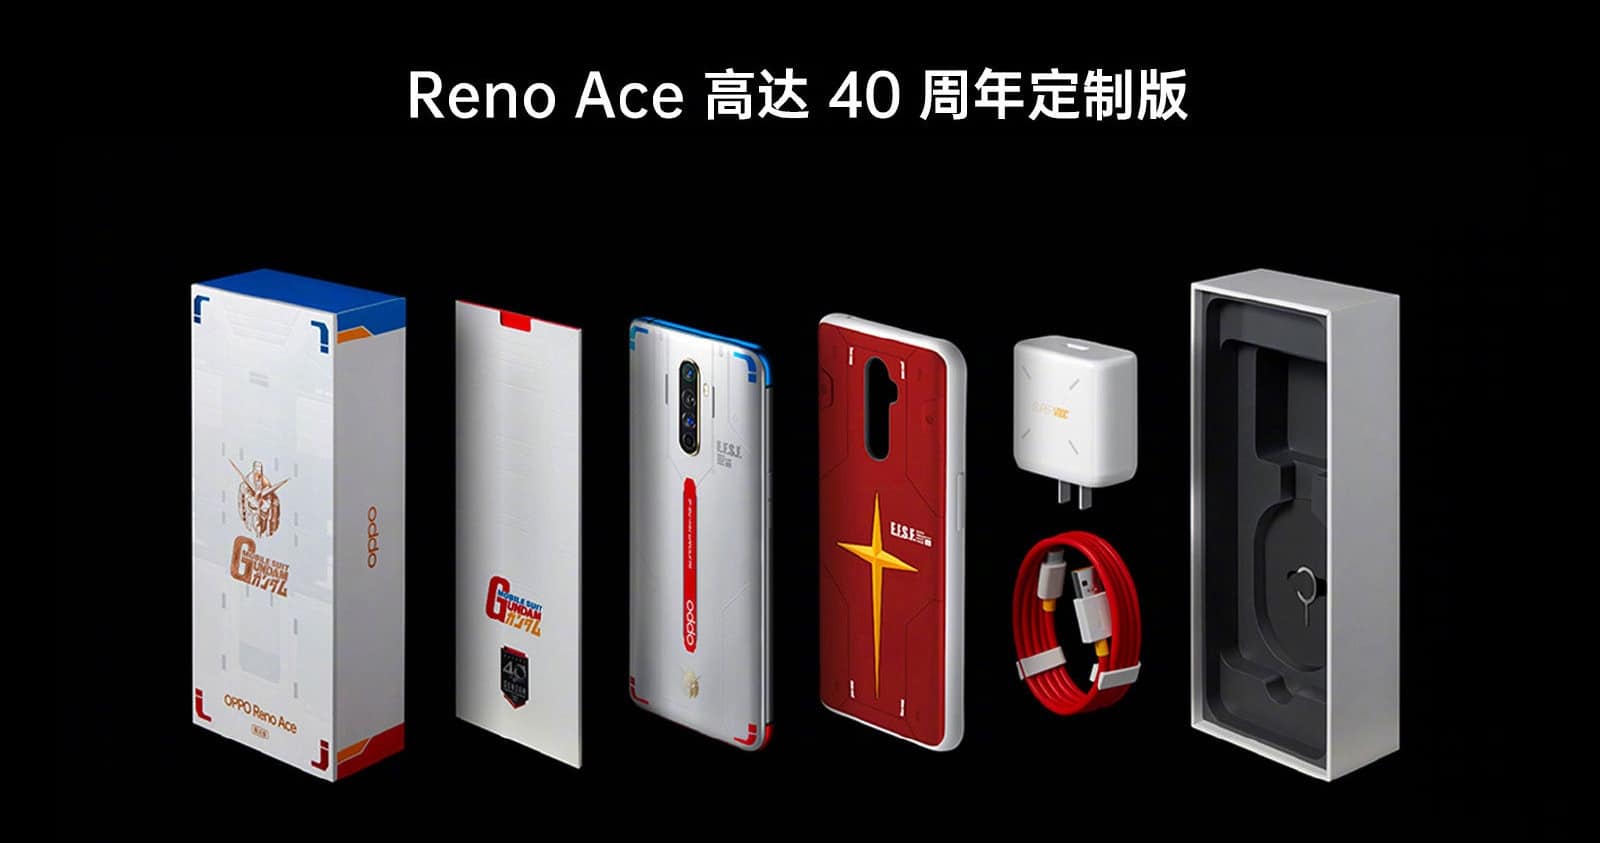 OPPO เปิดตัว Reno Ace เน้นเล่นเกม พร้อมรุ่นพิเศษ GUNDAM Edition 1